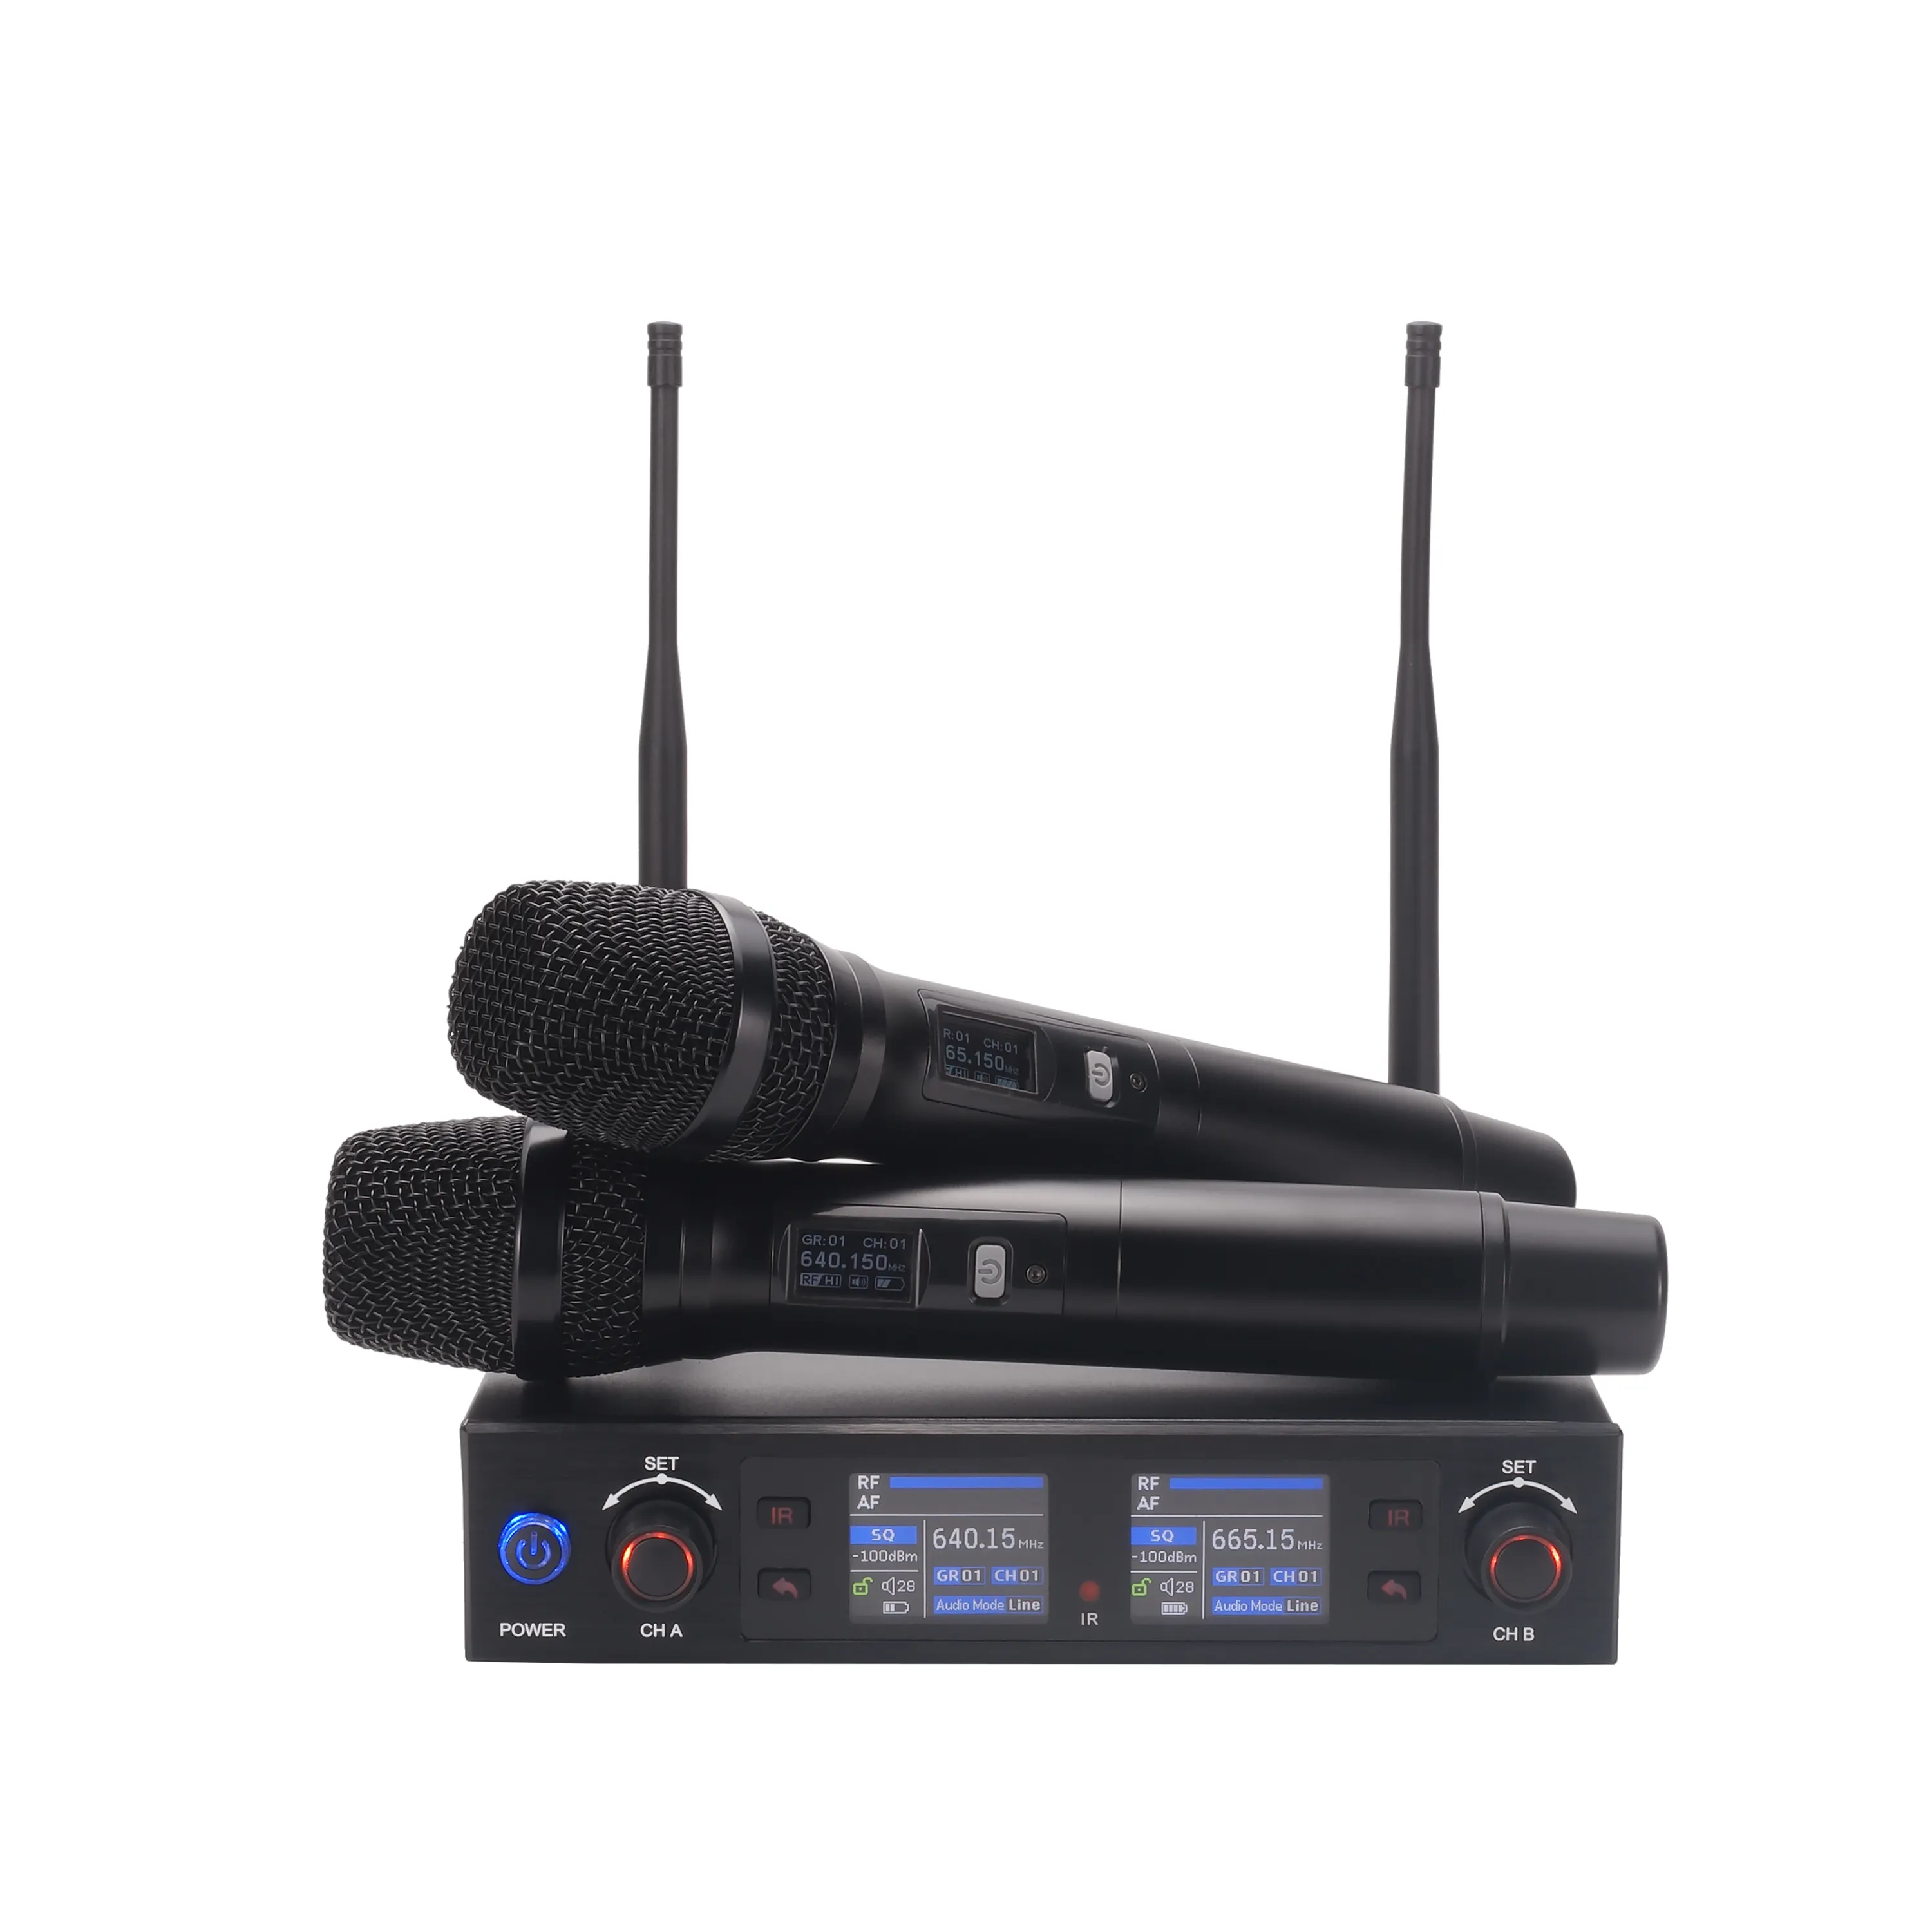 Doğruluk Pro ses UHF-2300 taşınabilir Karaoke sistemi mikrofon kablosuz profesyonel UHF kablosuz mikrofon